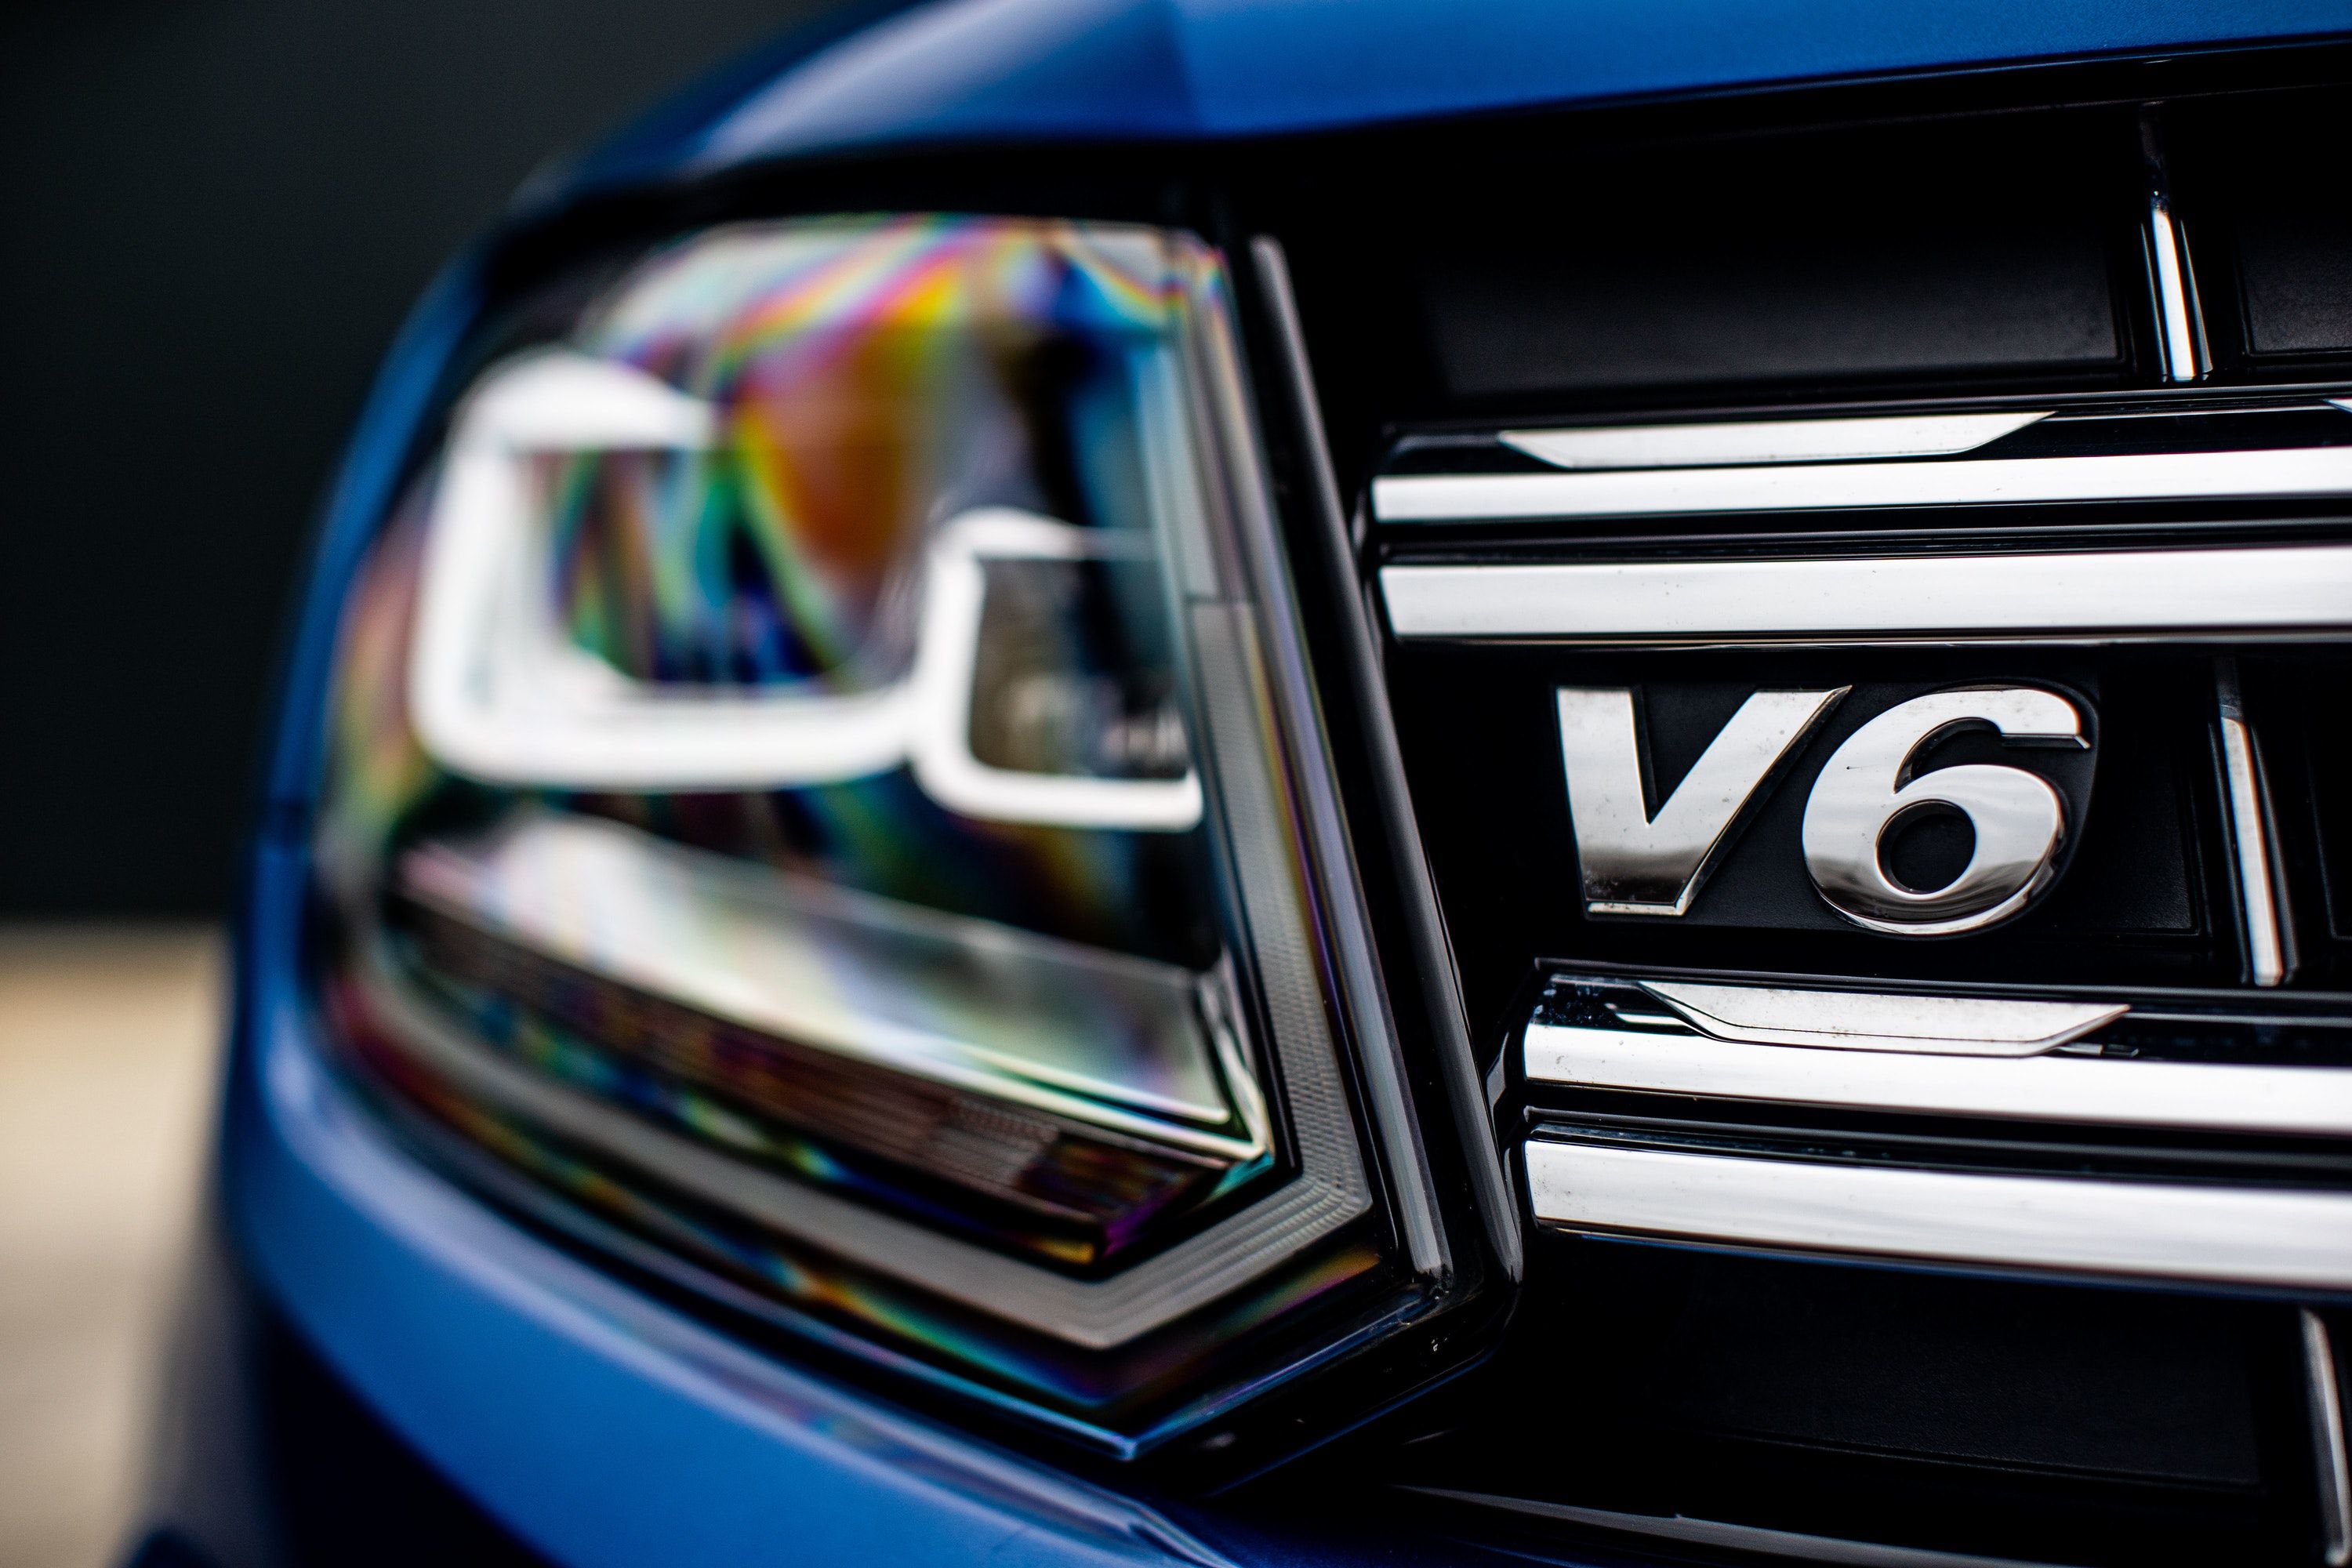 v6 badge on the VW Amarok 